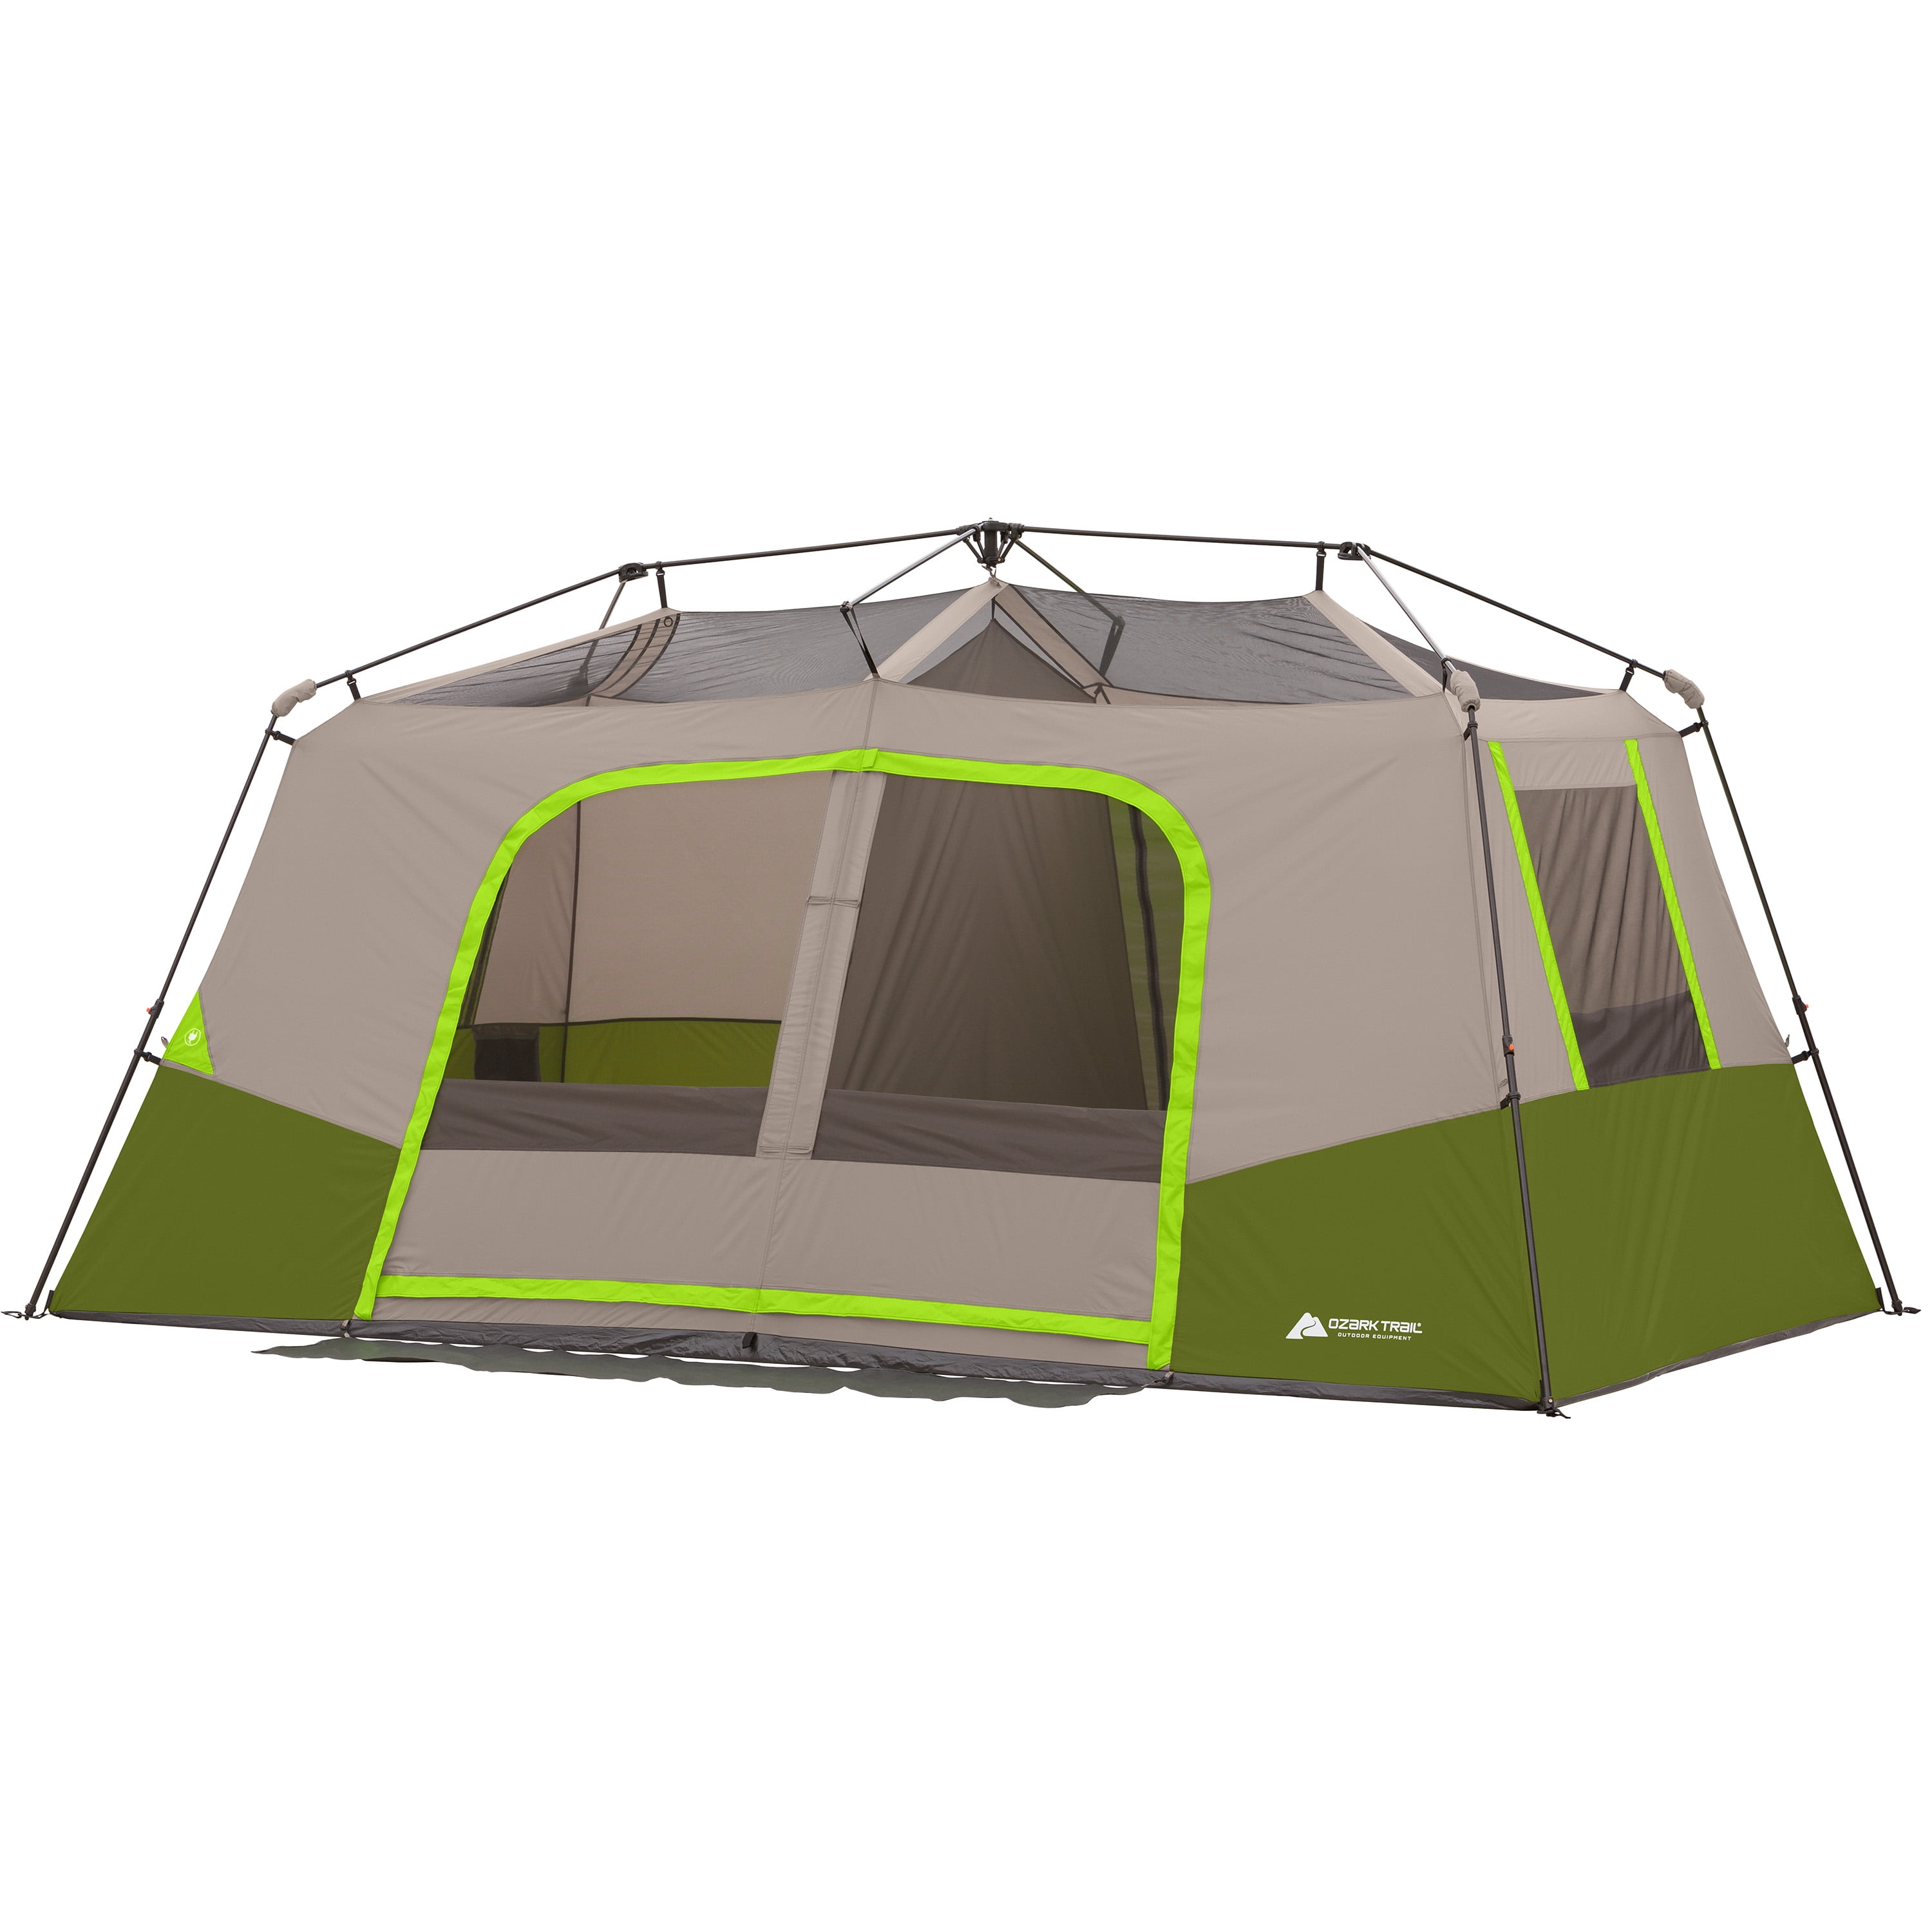 Menselijk ras bord De Kamer Ozark Trail 11-Person Instant Cabin Tent with Private Room - Walmart.com